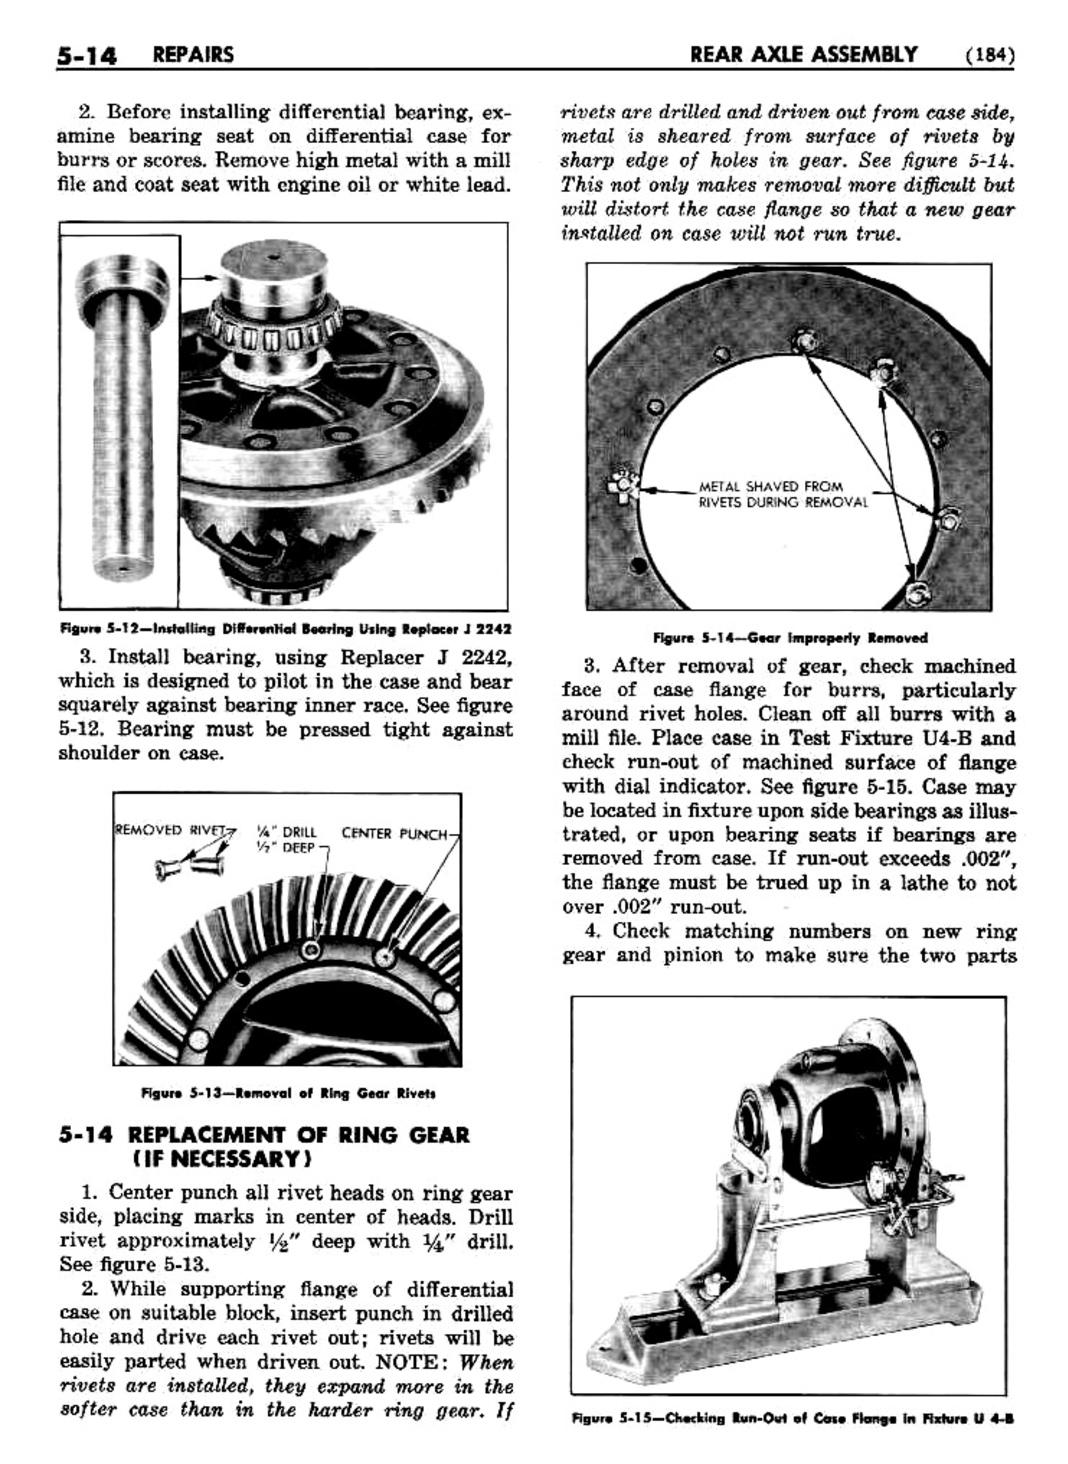 n_06 1948 Buick Shop Manual - Rear Axle-014-014.jpg